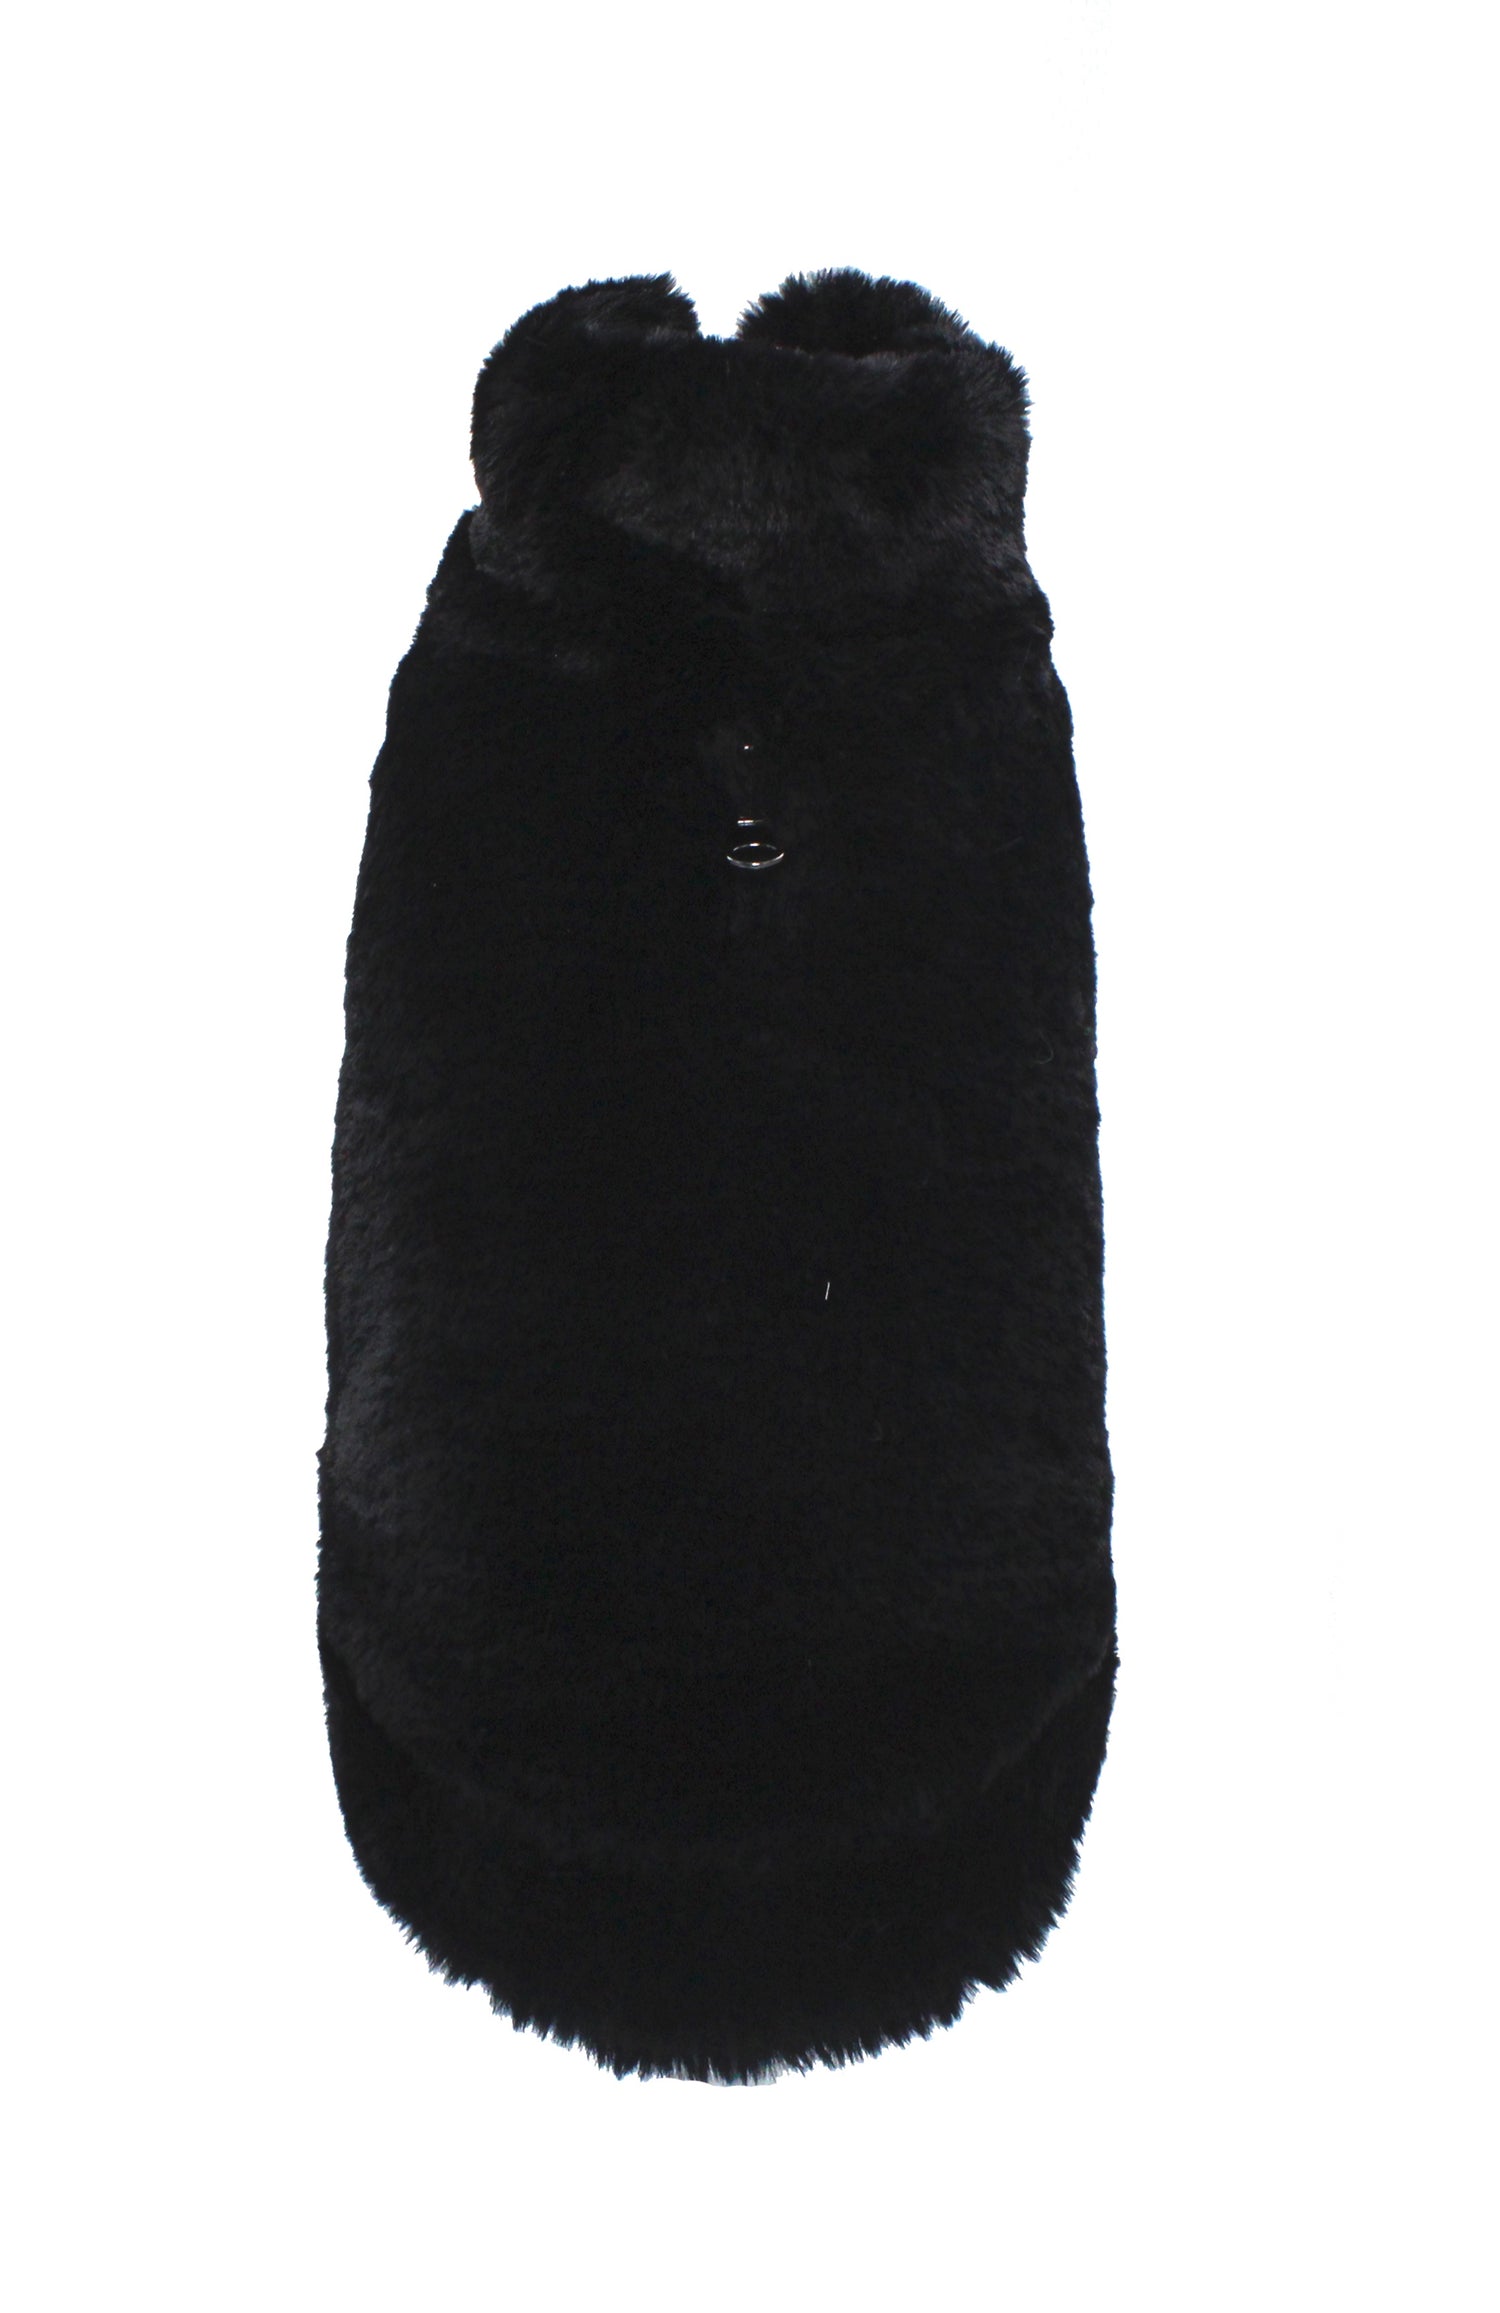 Kenya dog coat 2 in 1 (reversible coat)